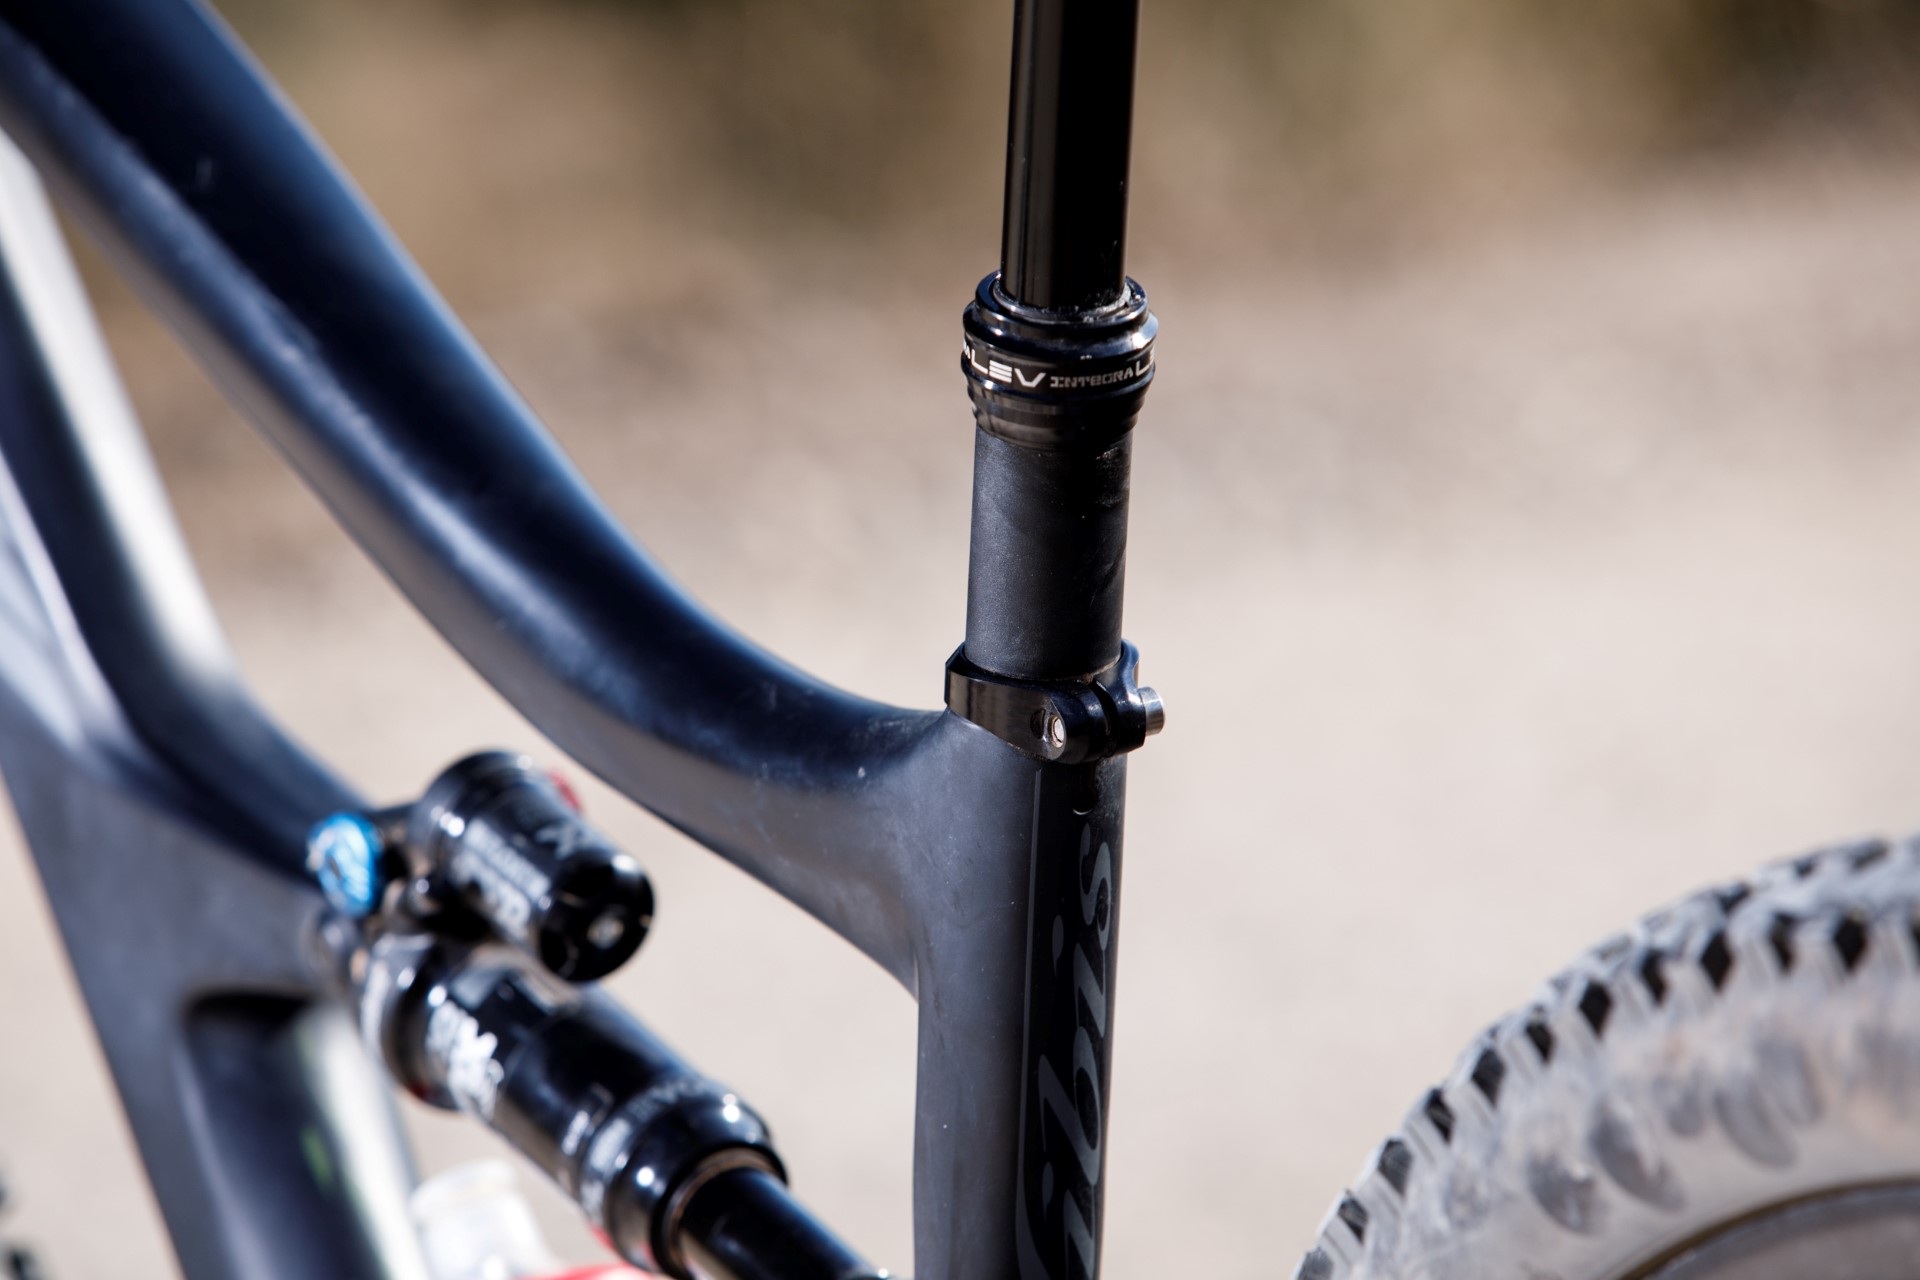 Ibis Ripmo cycles – Dan Doron